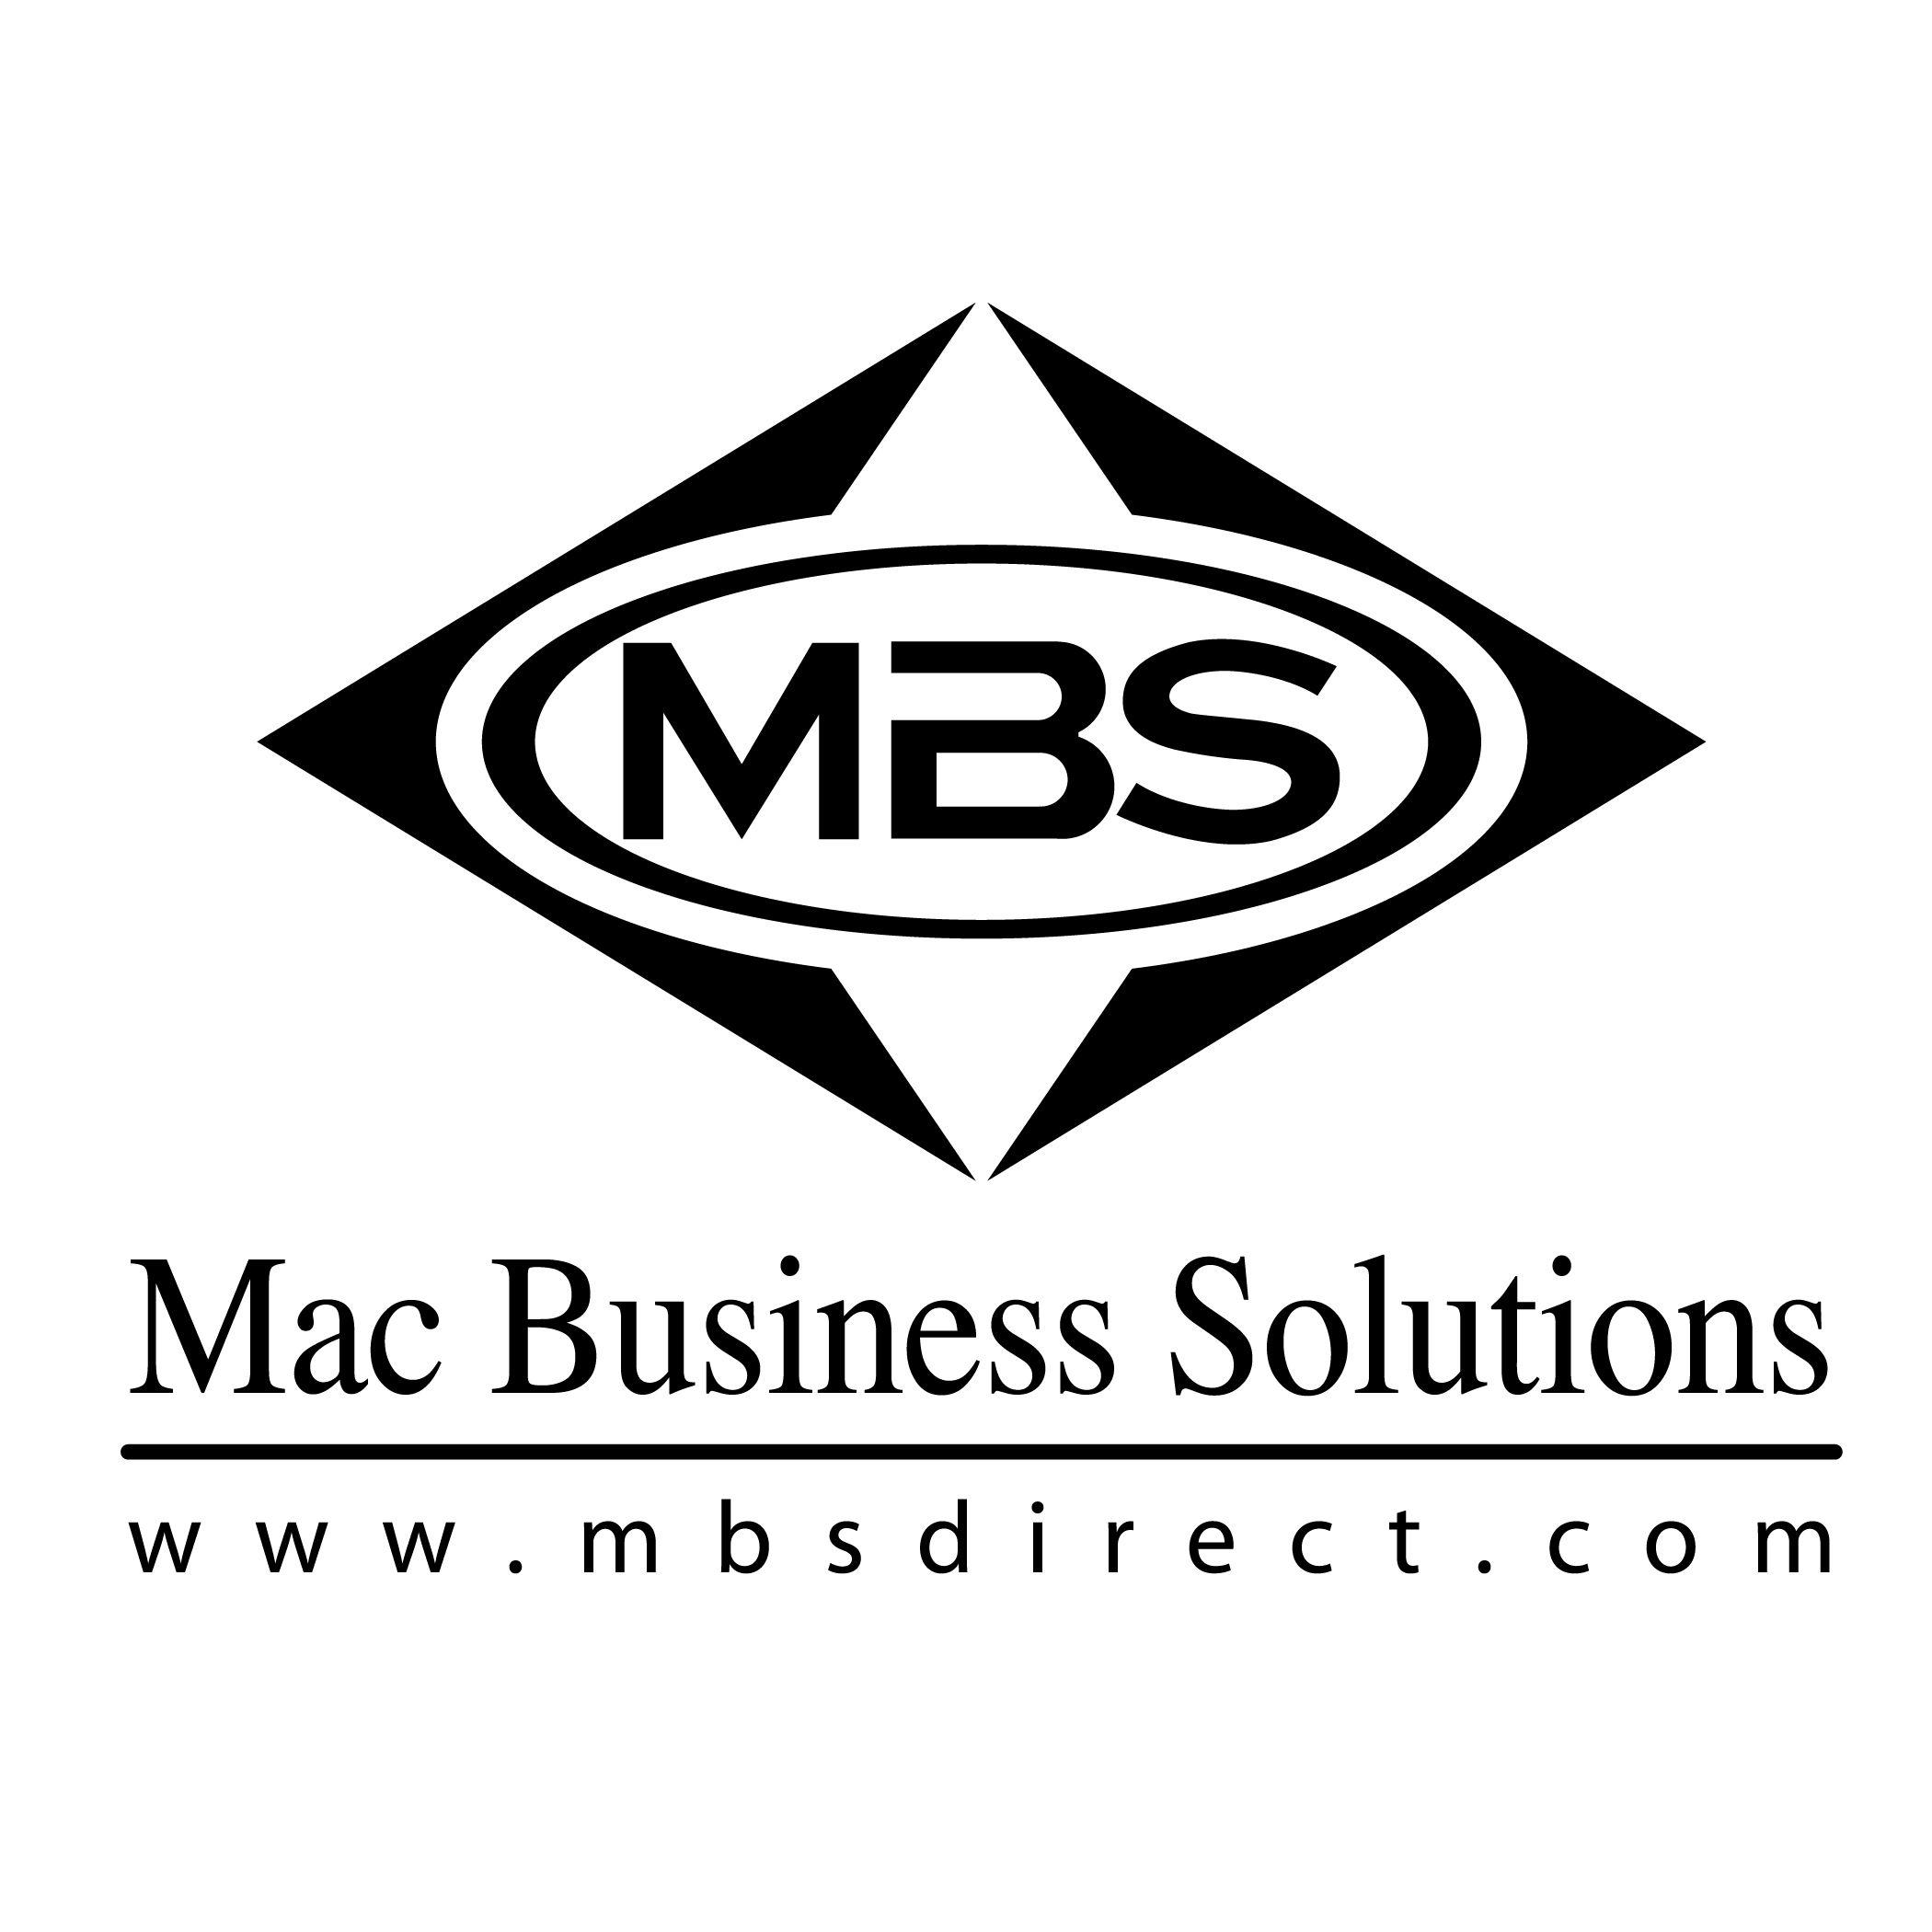 MBS Logo - MBS Downloads - Mac Business Solutions - Apple Premier Partner